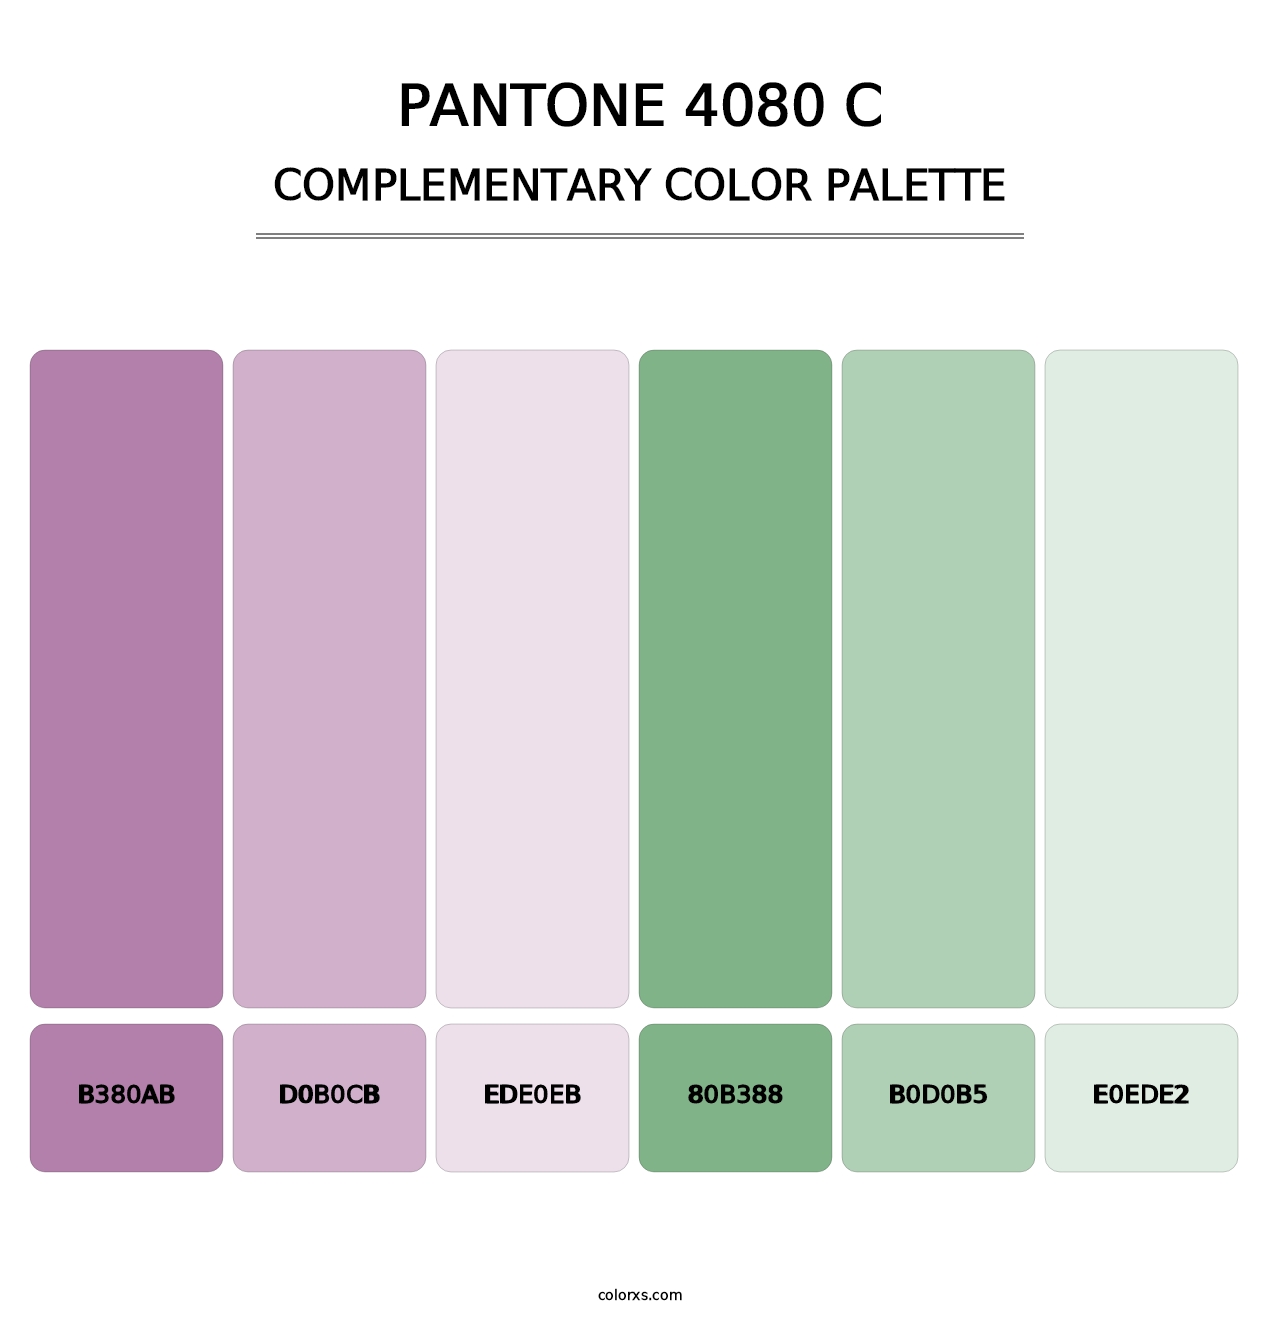 PANTONE 4080 C - Complementary Color Palette